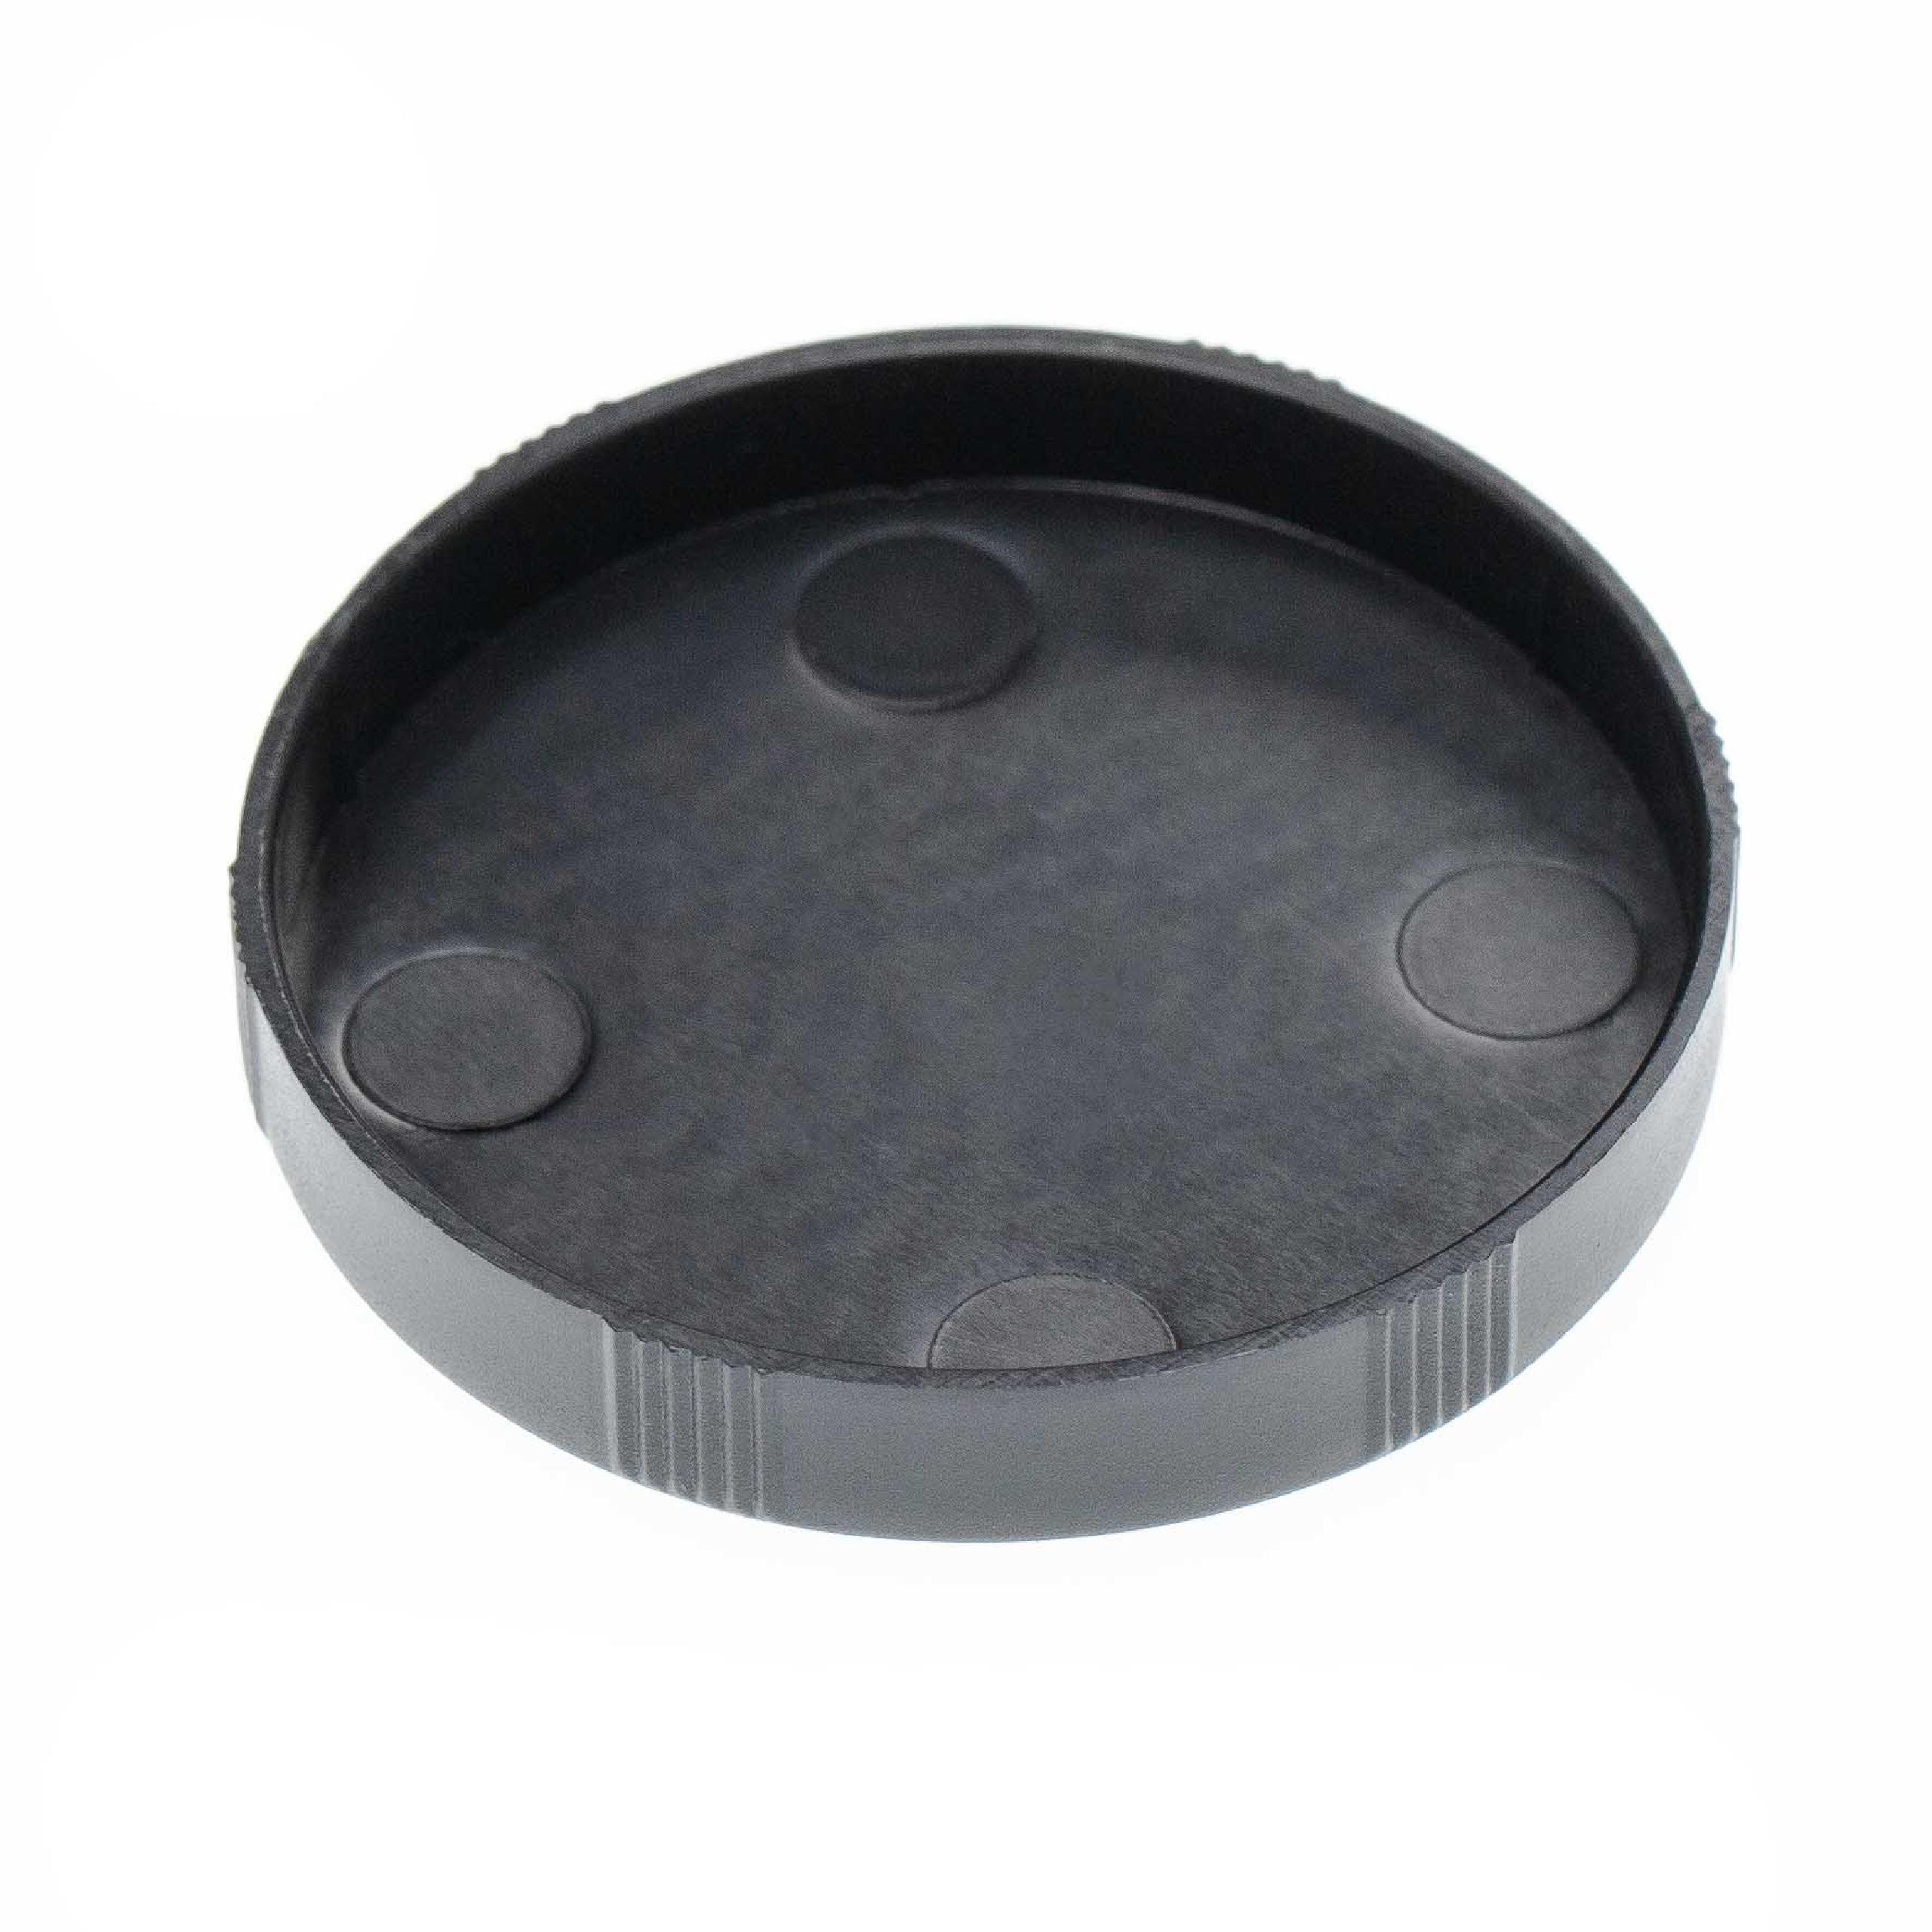 Tapa objetivo para prismáticos con diámetro de 45 mm - negro, acoplable